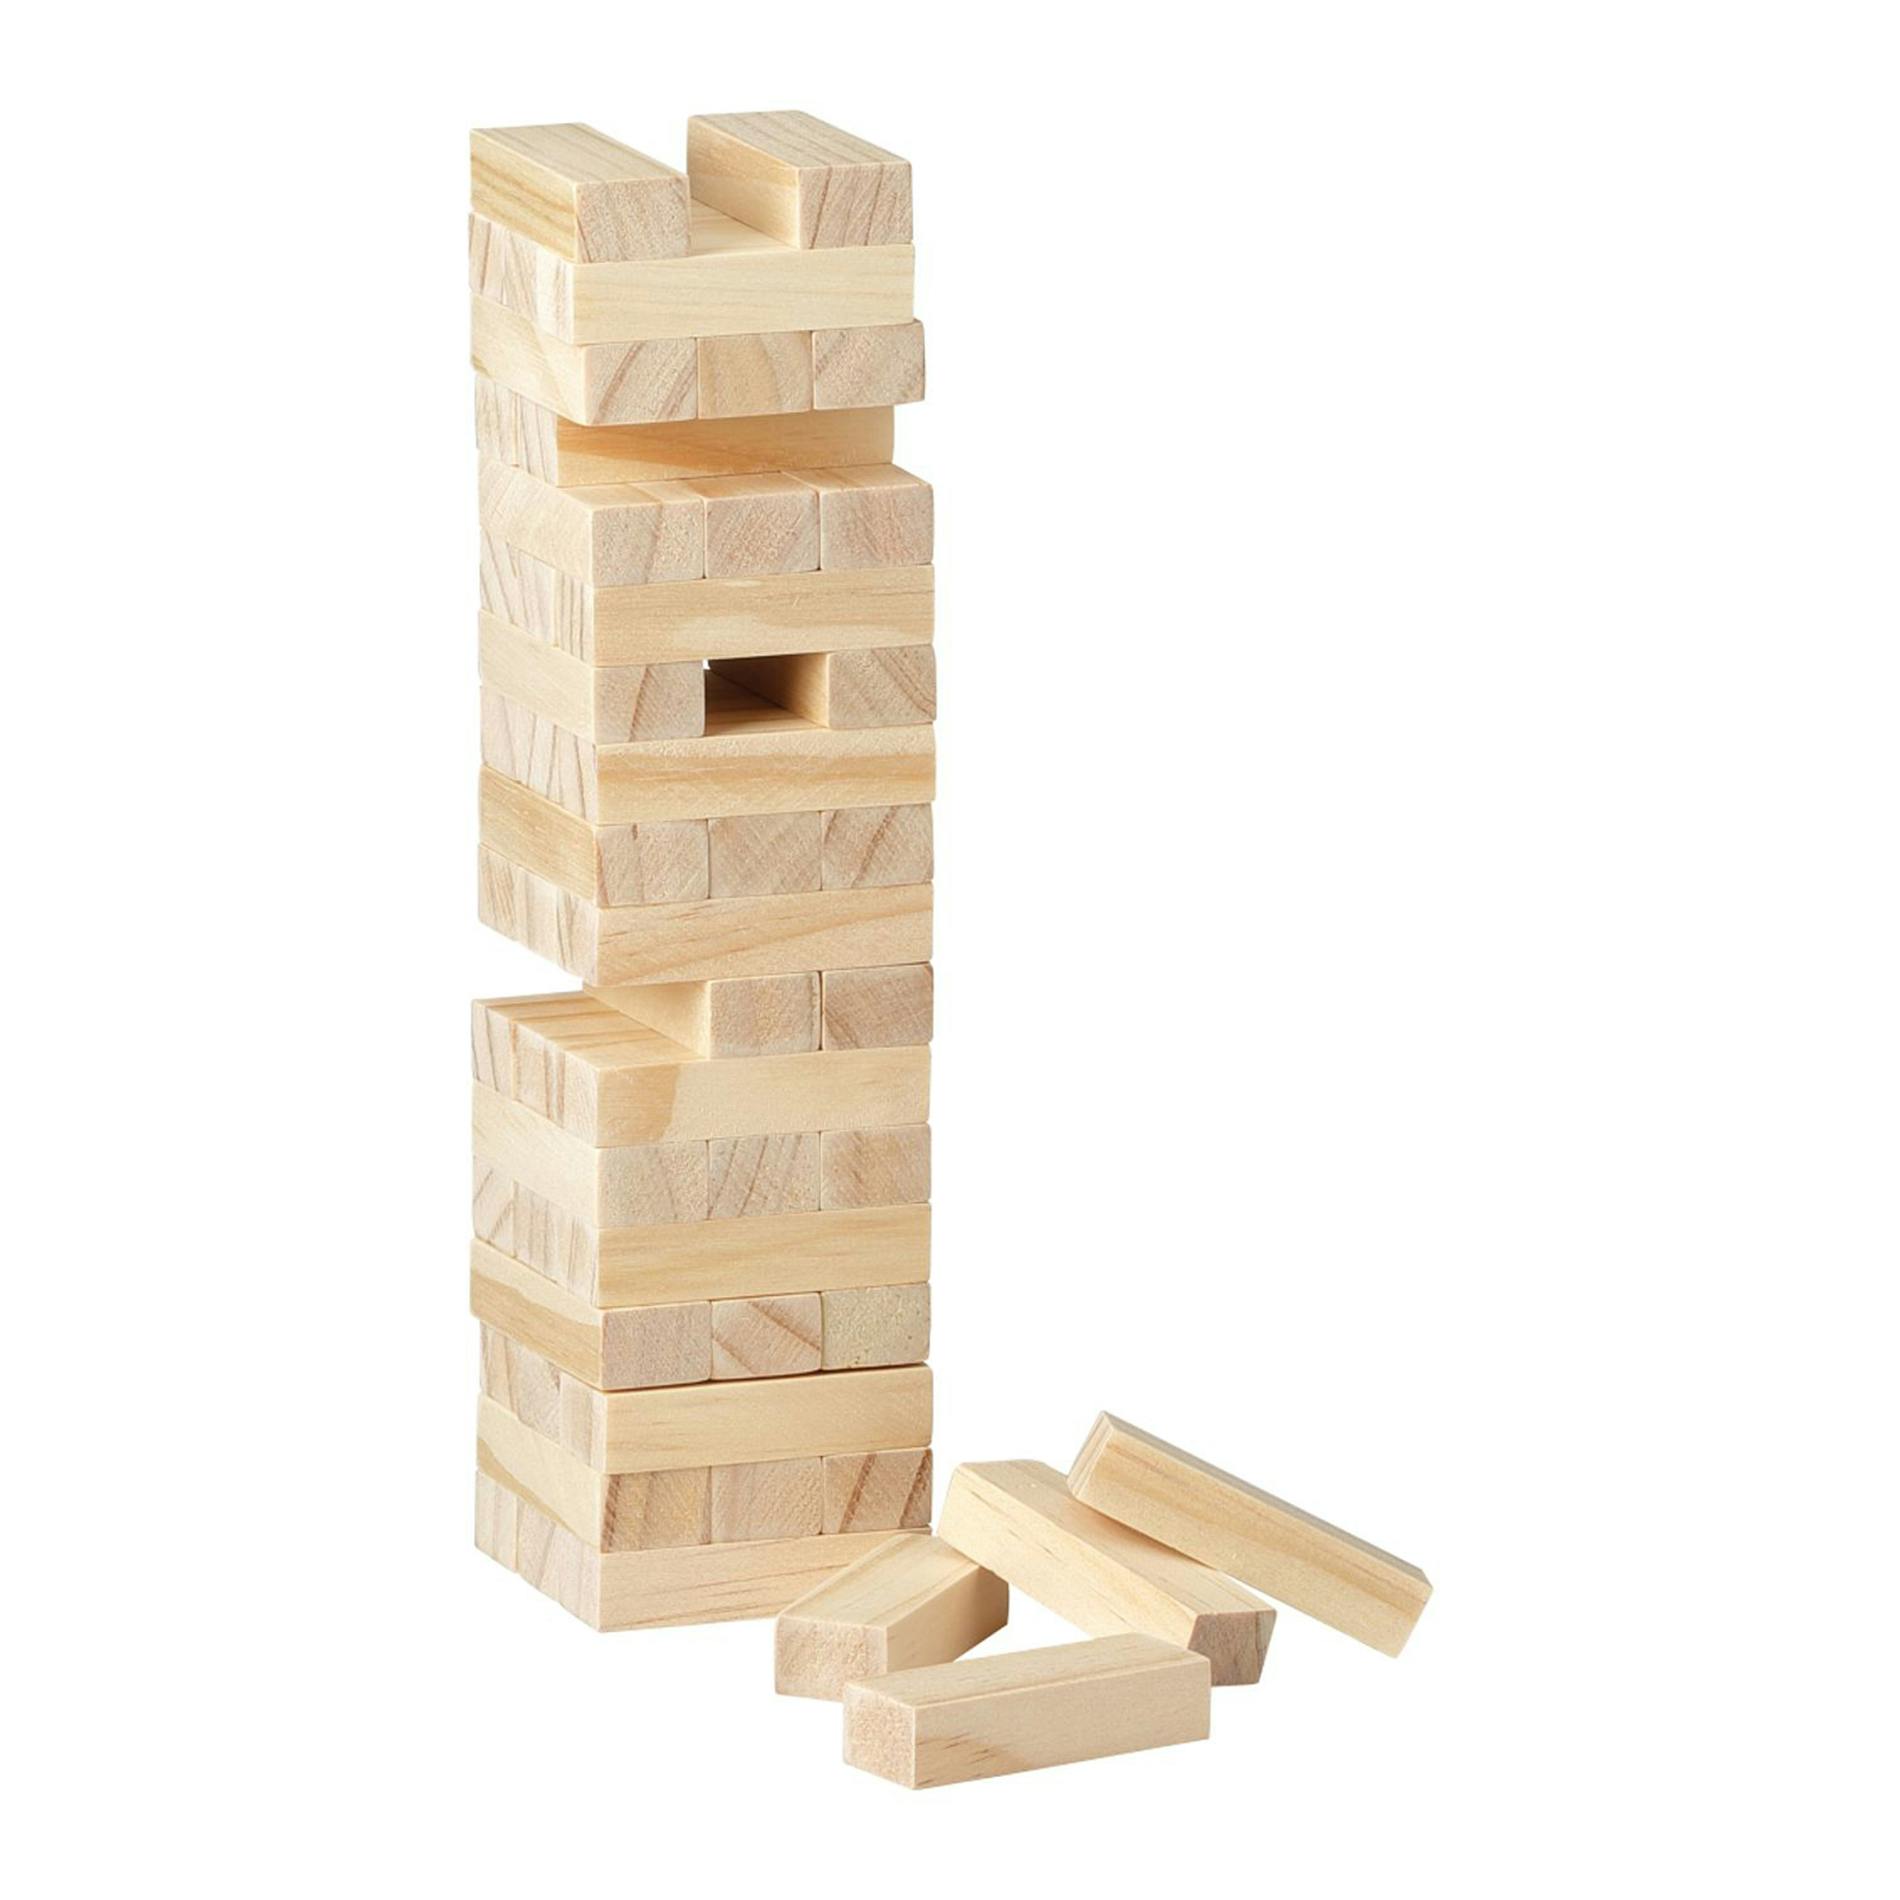 Tumbling Tower Wood Block Stacking Game - additional Image 2